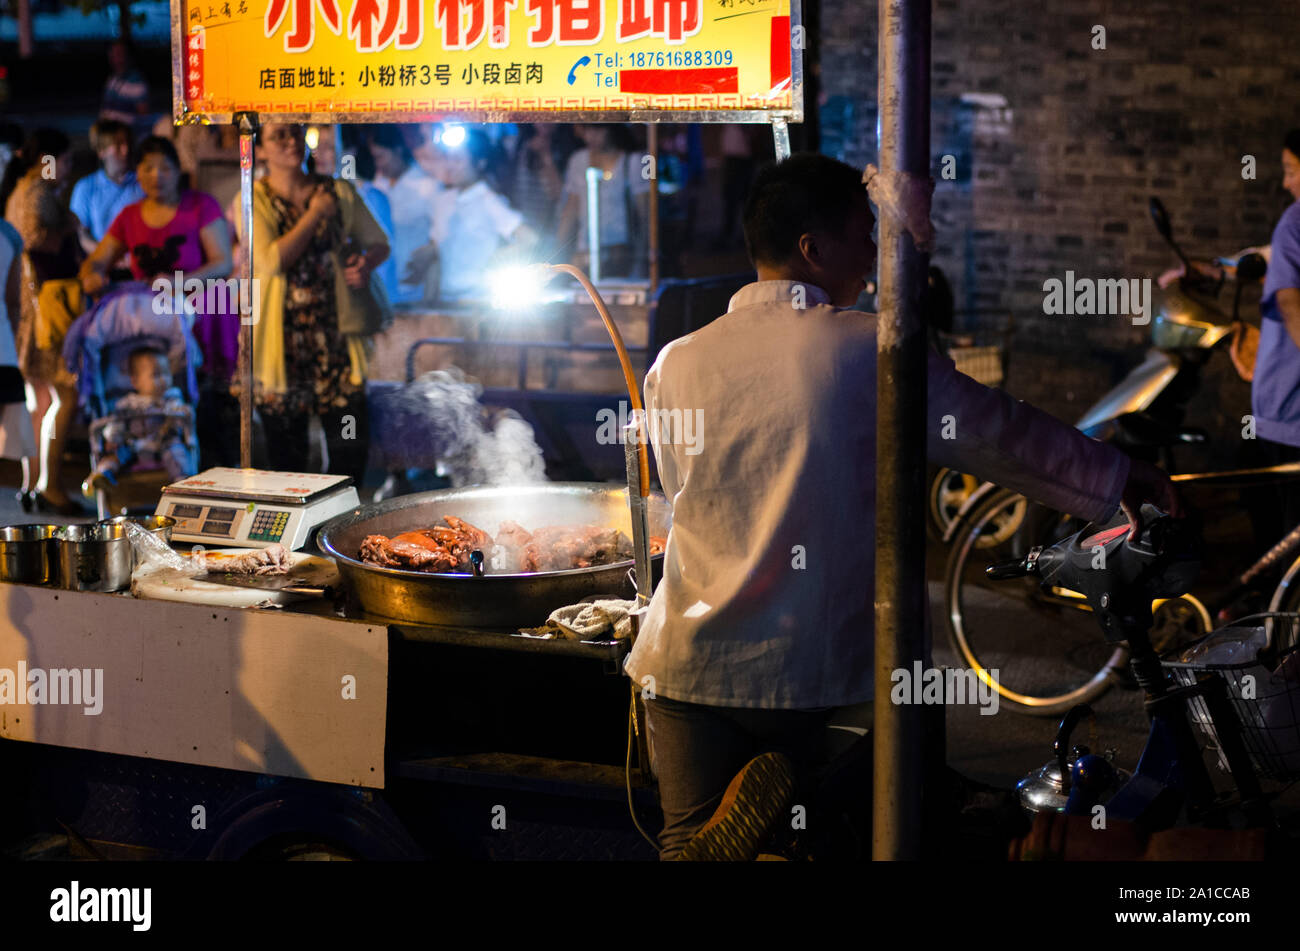 Street food stall outside Guangzhou Lu metro station in Nanjing Stock Photo